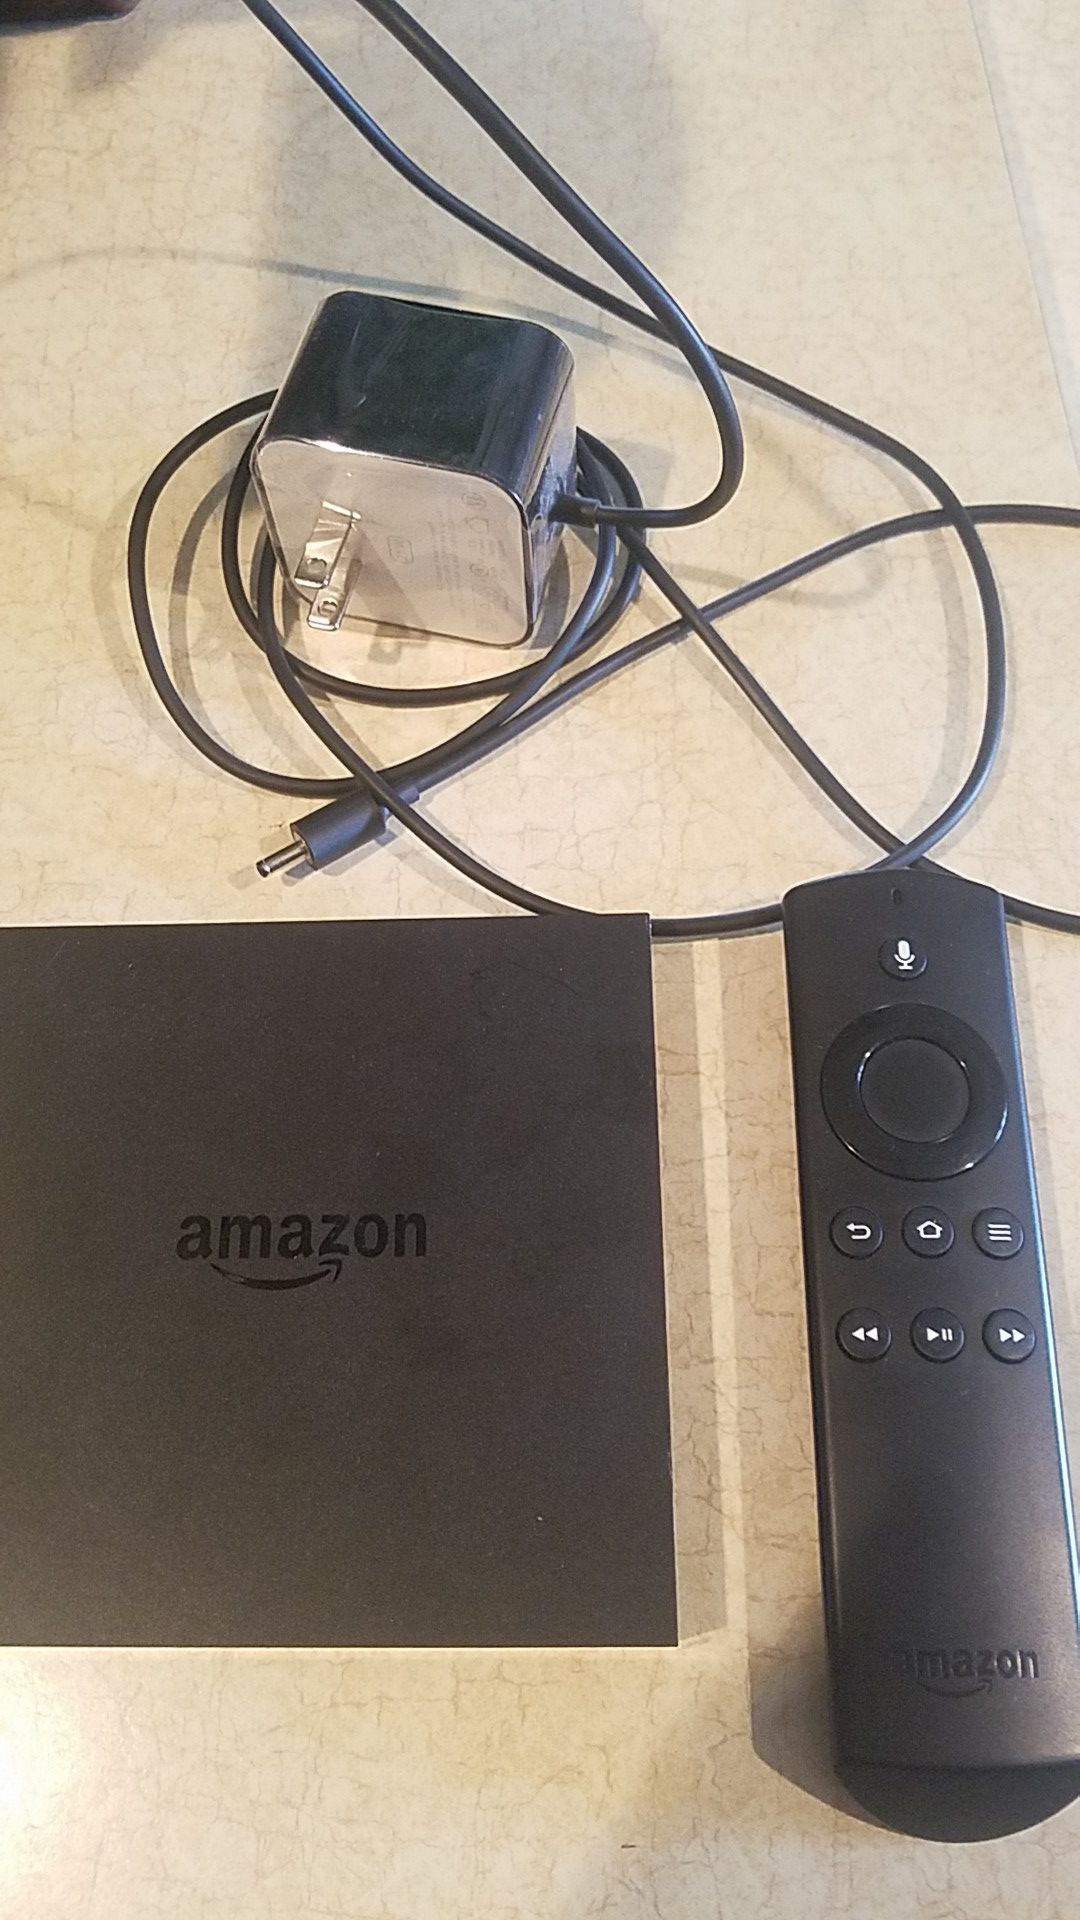 Amazon fire TV